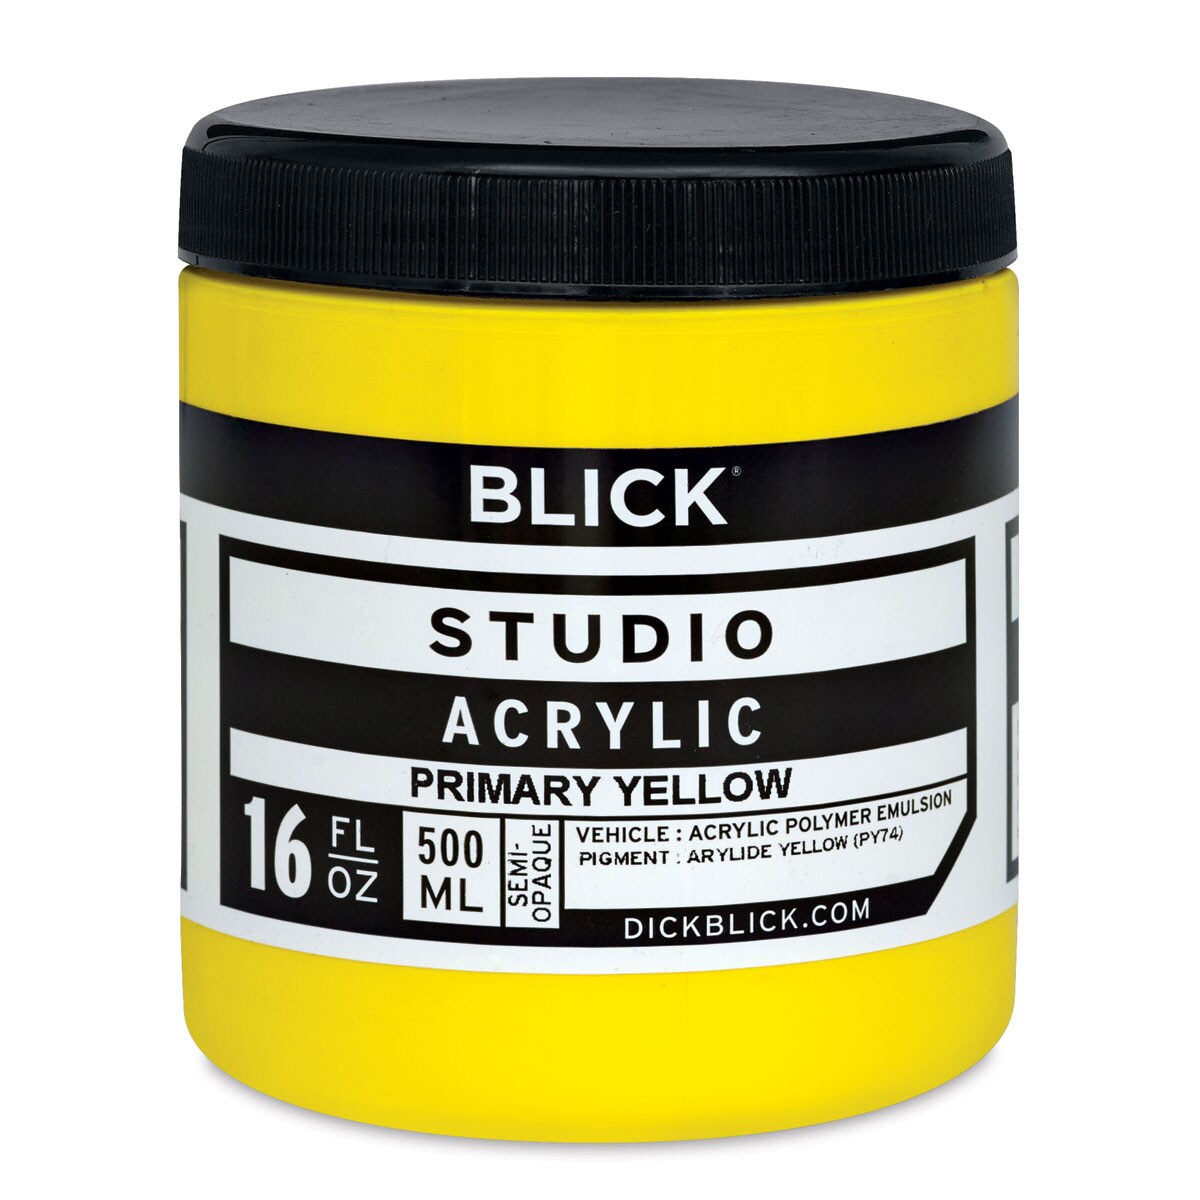 Blick Studio Acrylics - Primary Yellow,  16 oz jar